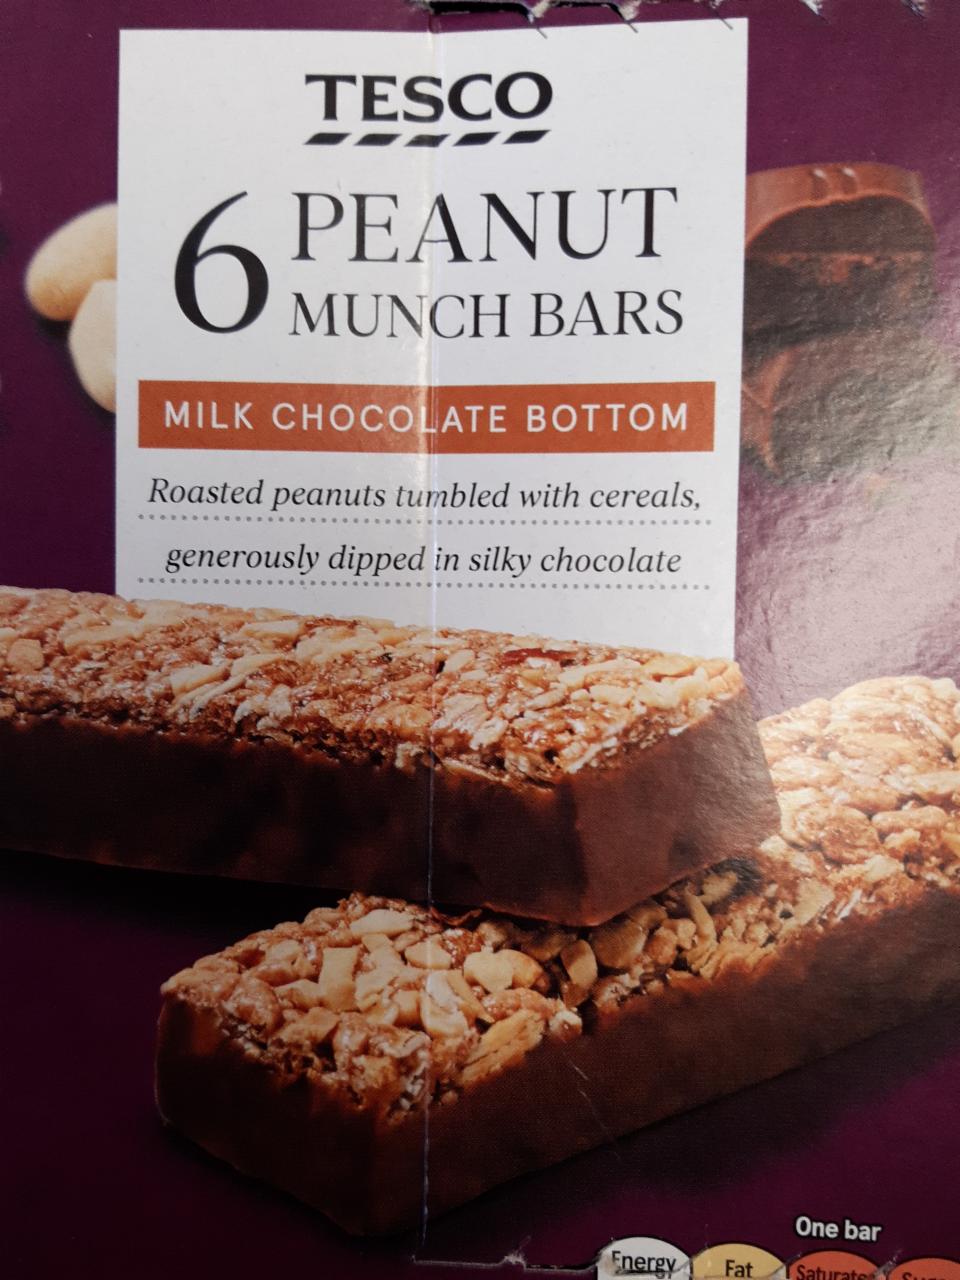 Fotografie - 6 Peanut Munch Bars Milk Chocolate Bottom Tesco